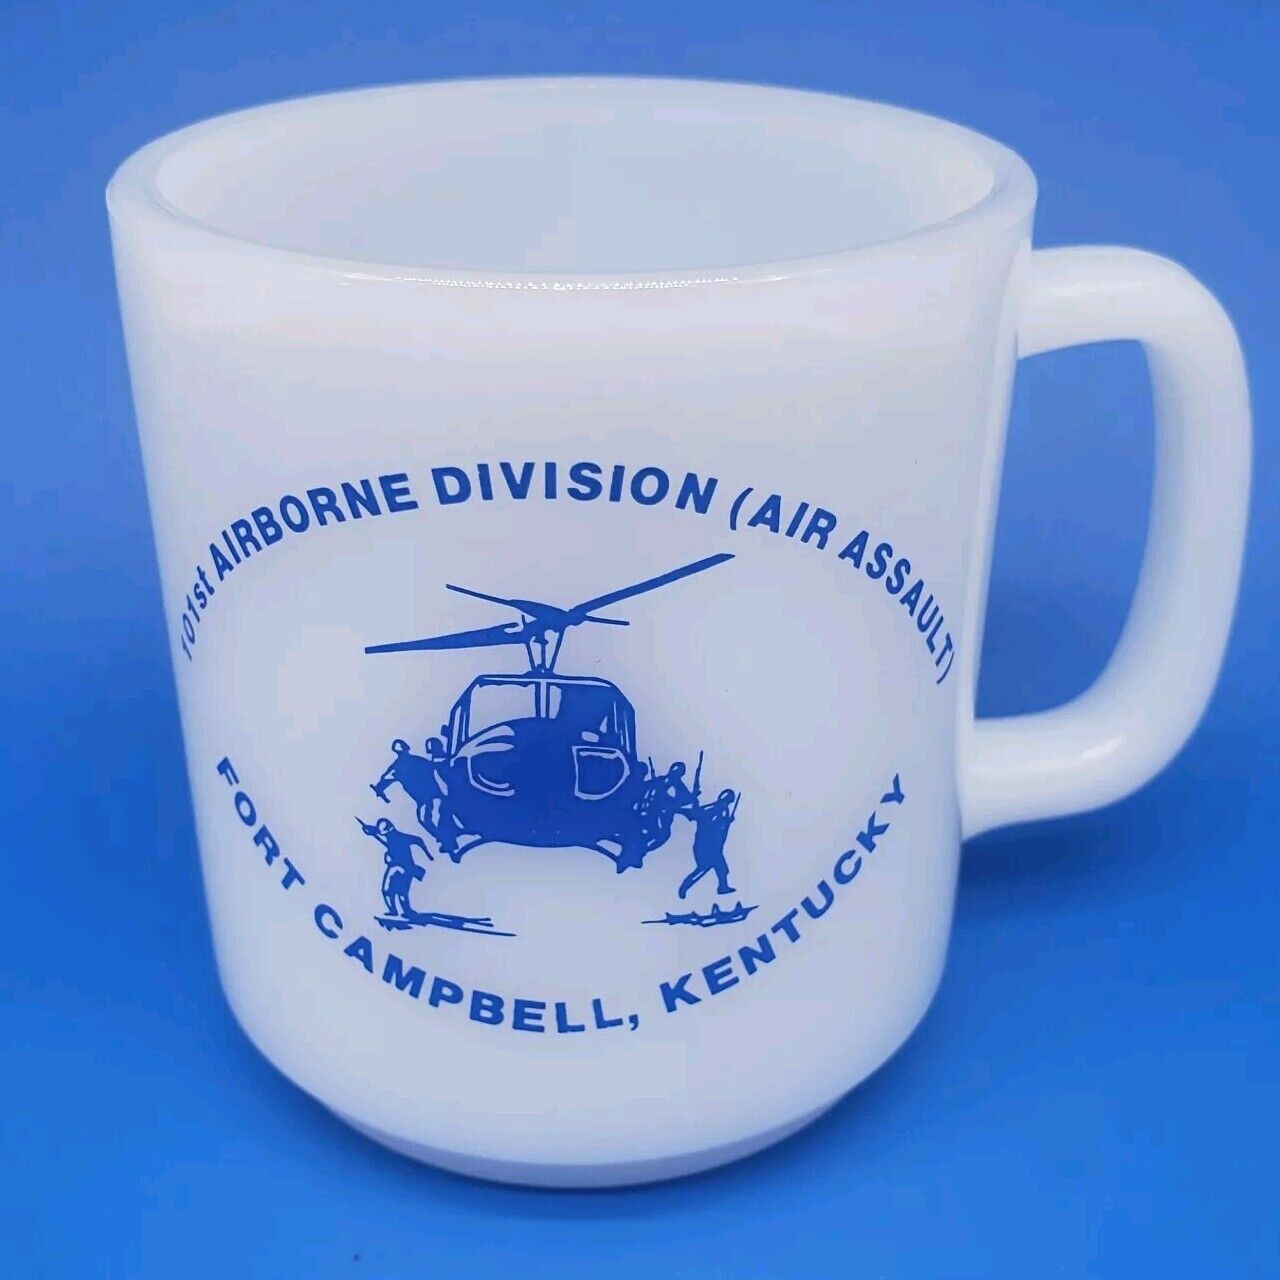 Vintage Glasbake Milk Glass Mug 101st Airborne Division Ft. Campbell Kentucky